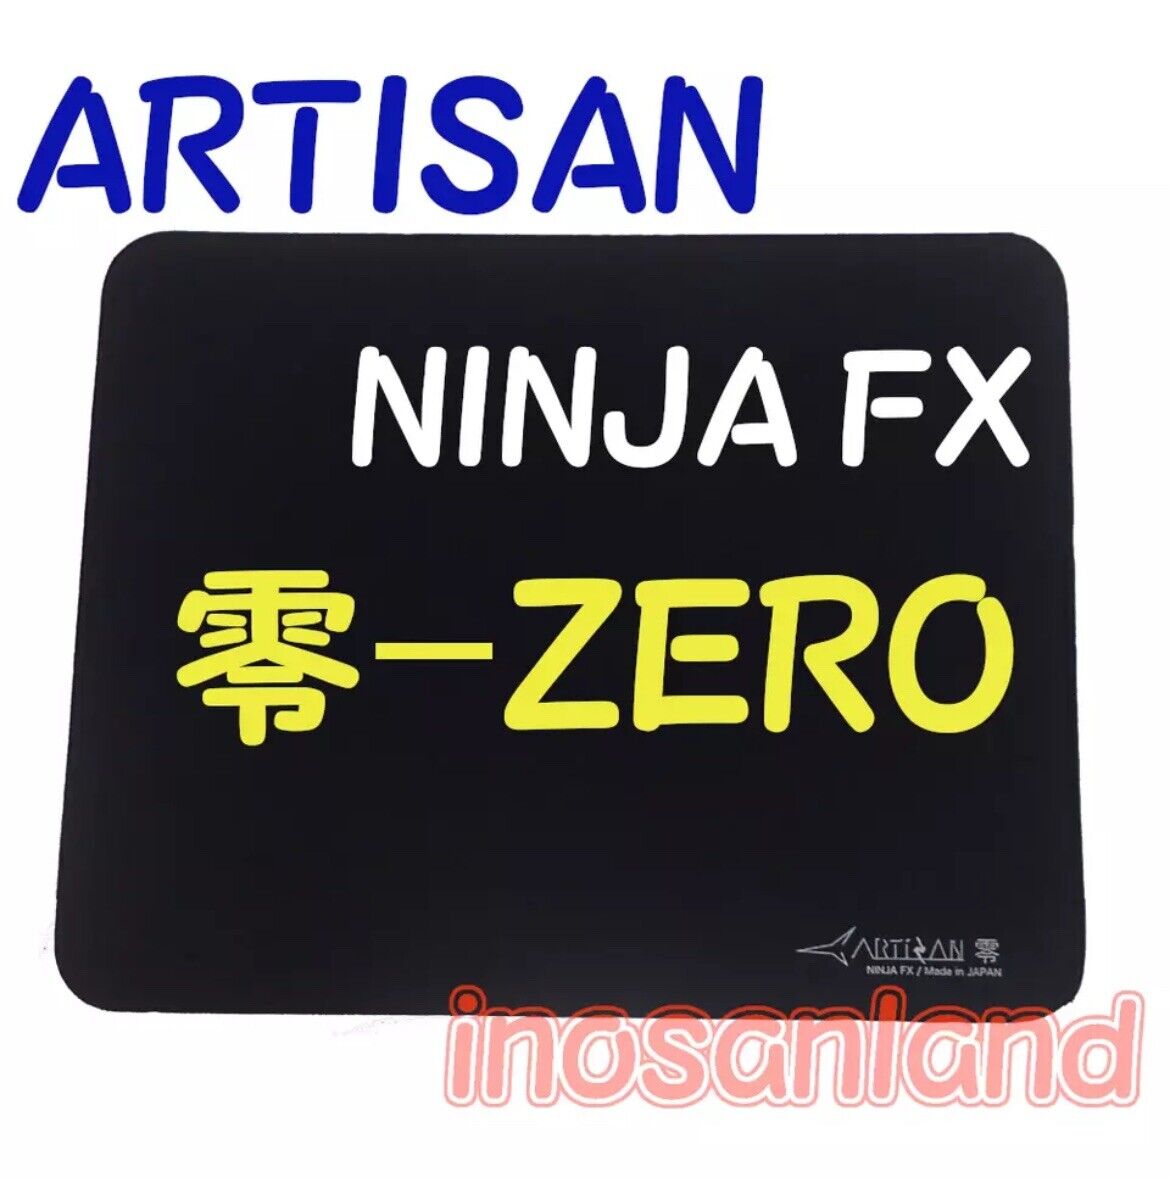 ARTISAN Zero Gaming Mouse Pad Ninja FX  SOFT XL